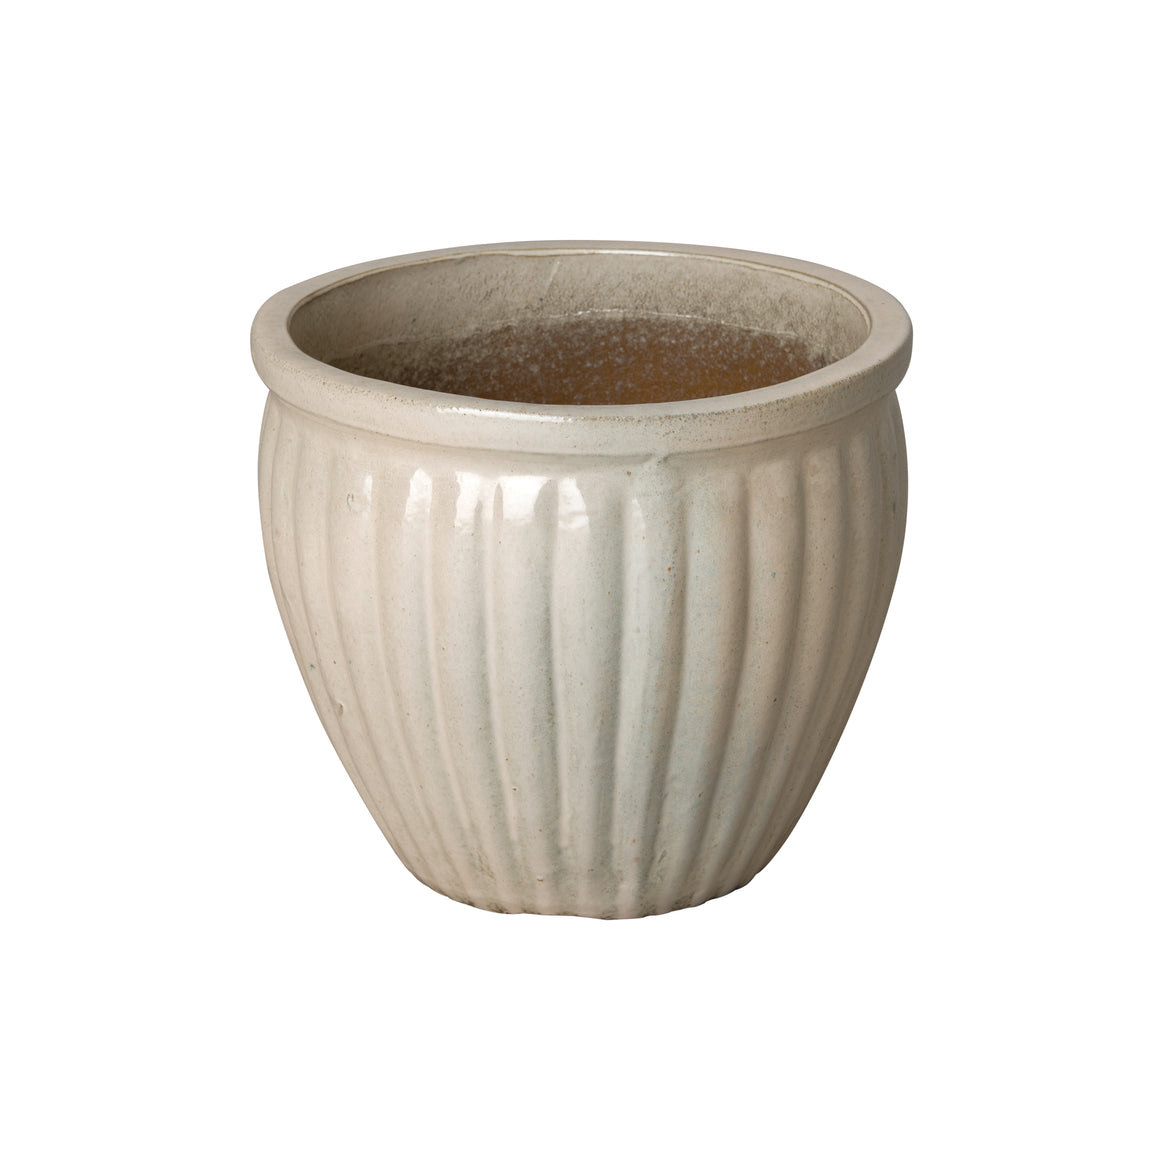 Round Ridge Ceramic Planter with a Pearl White Glaze